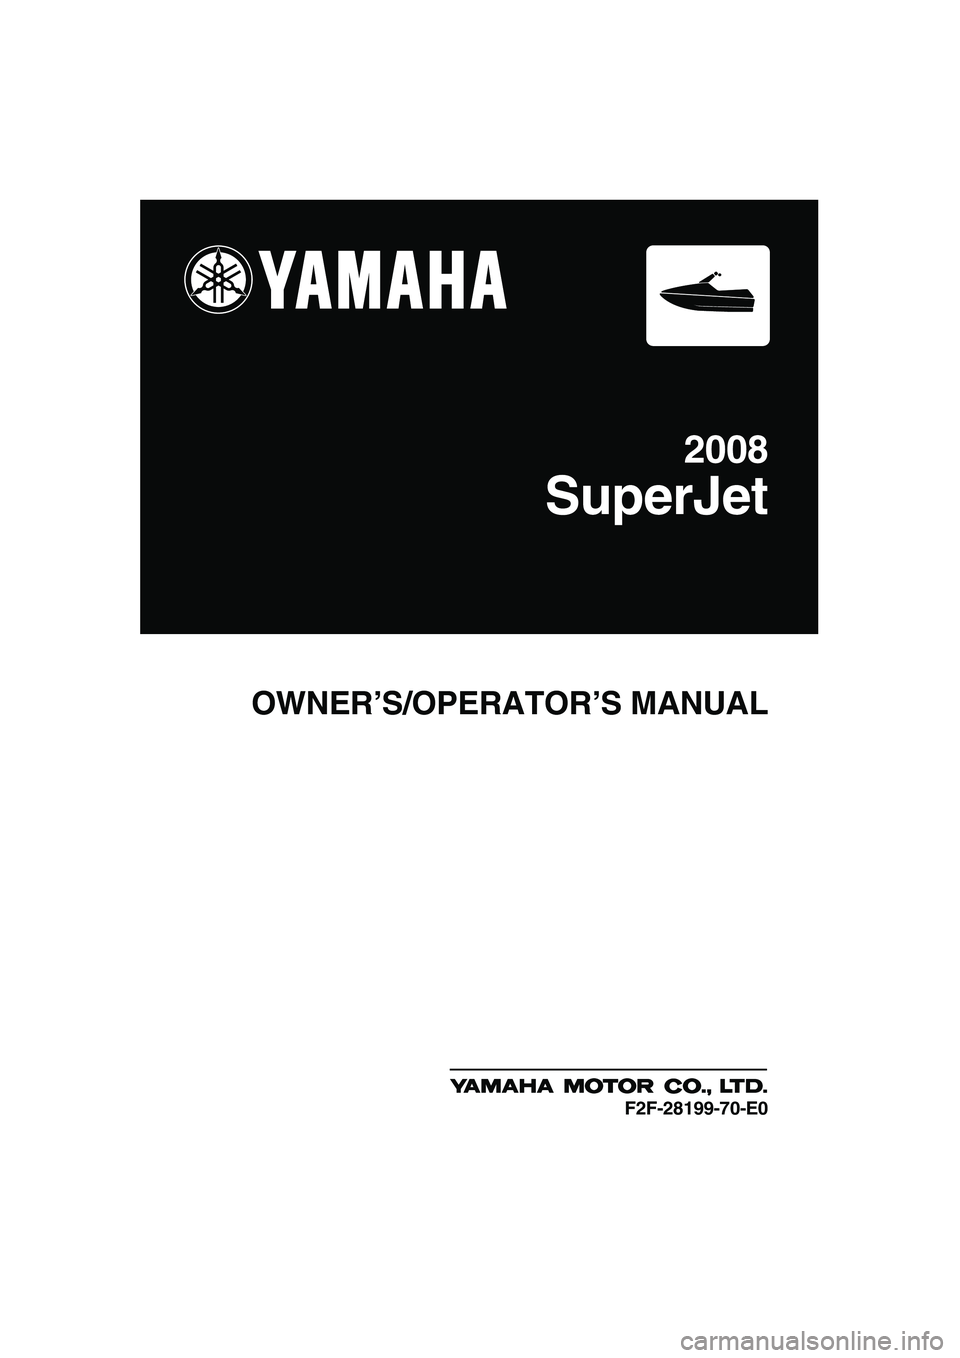 YAMAHA SUPERJET 2008  Owners Manual 